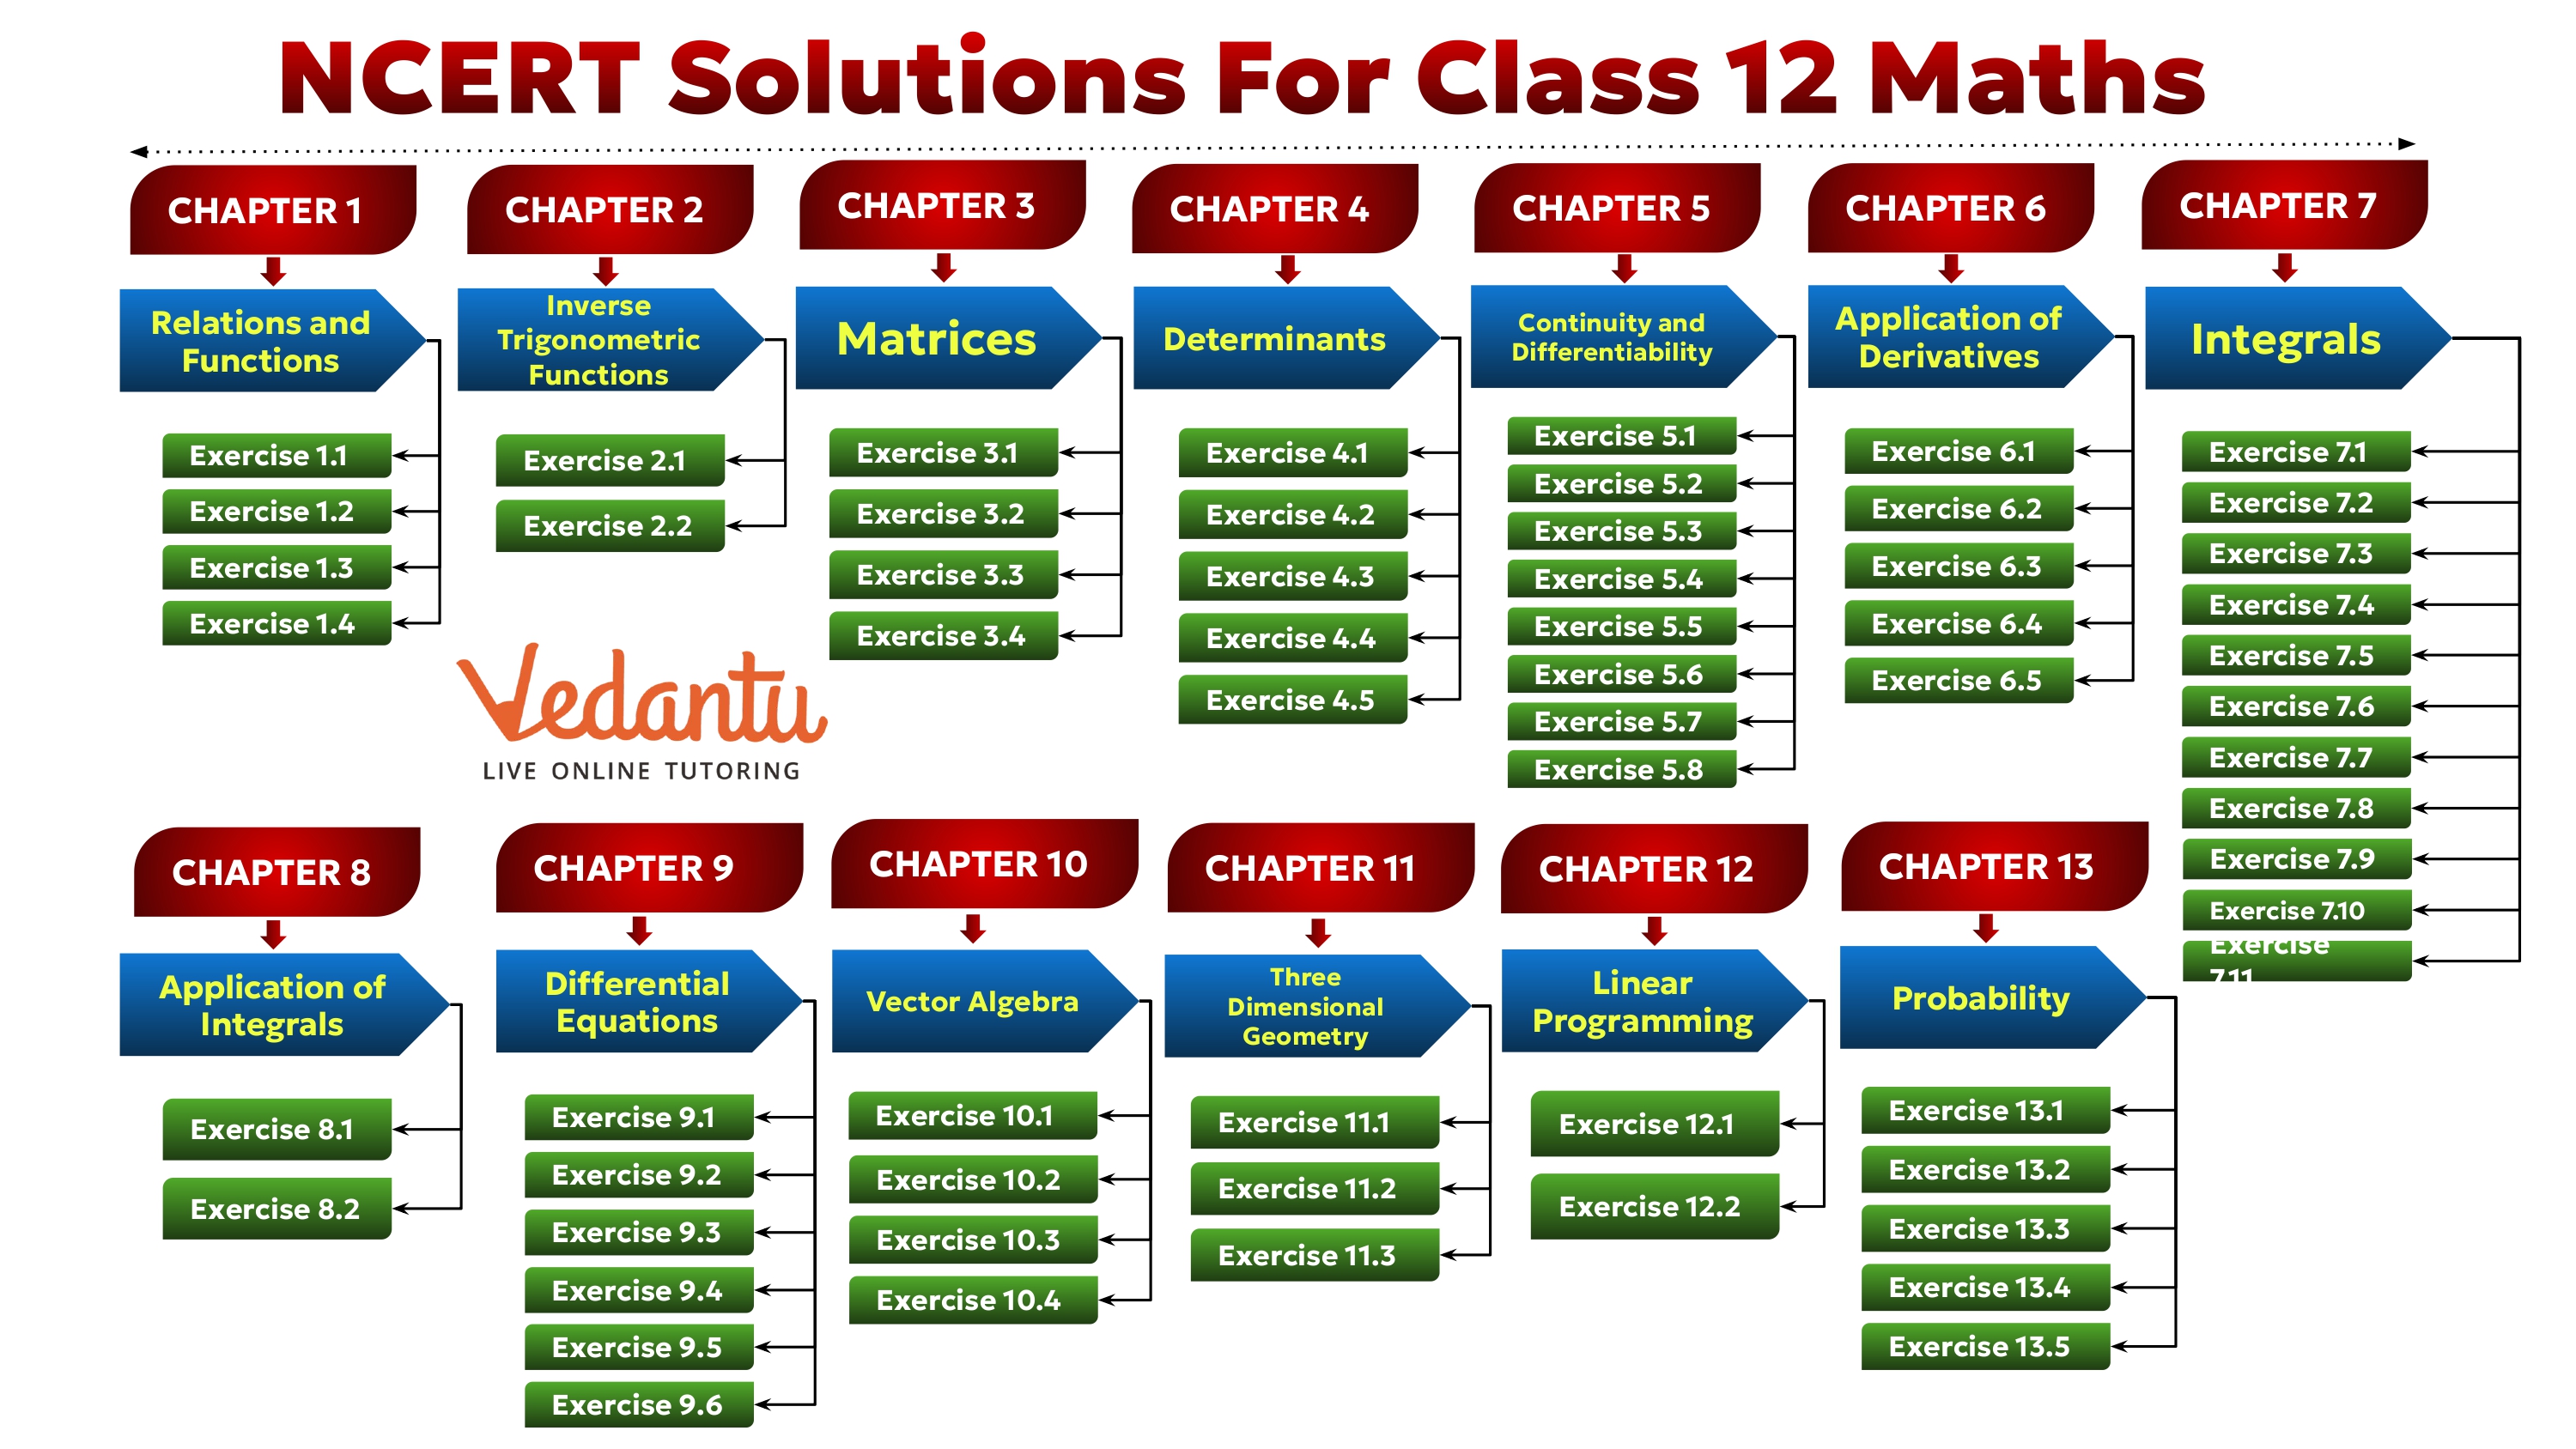 NCERT Solutions for Class 12 Maths Chapter-wise List